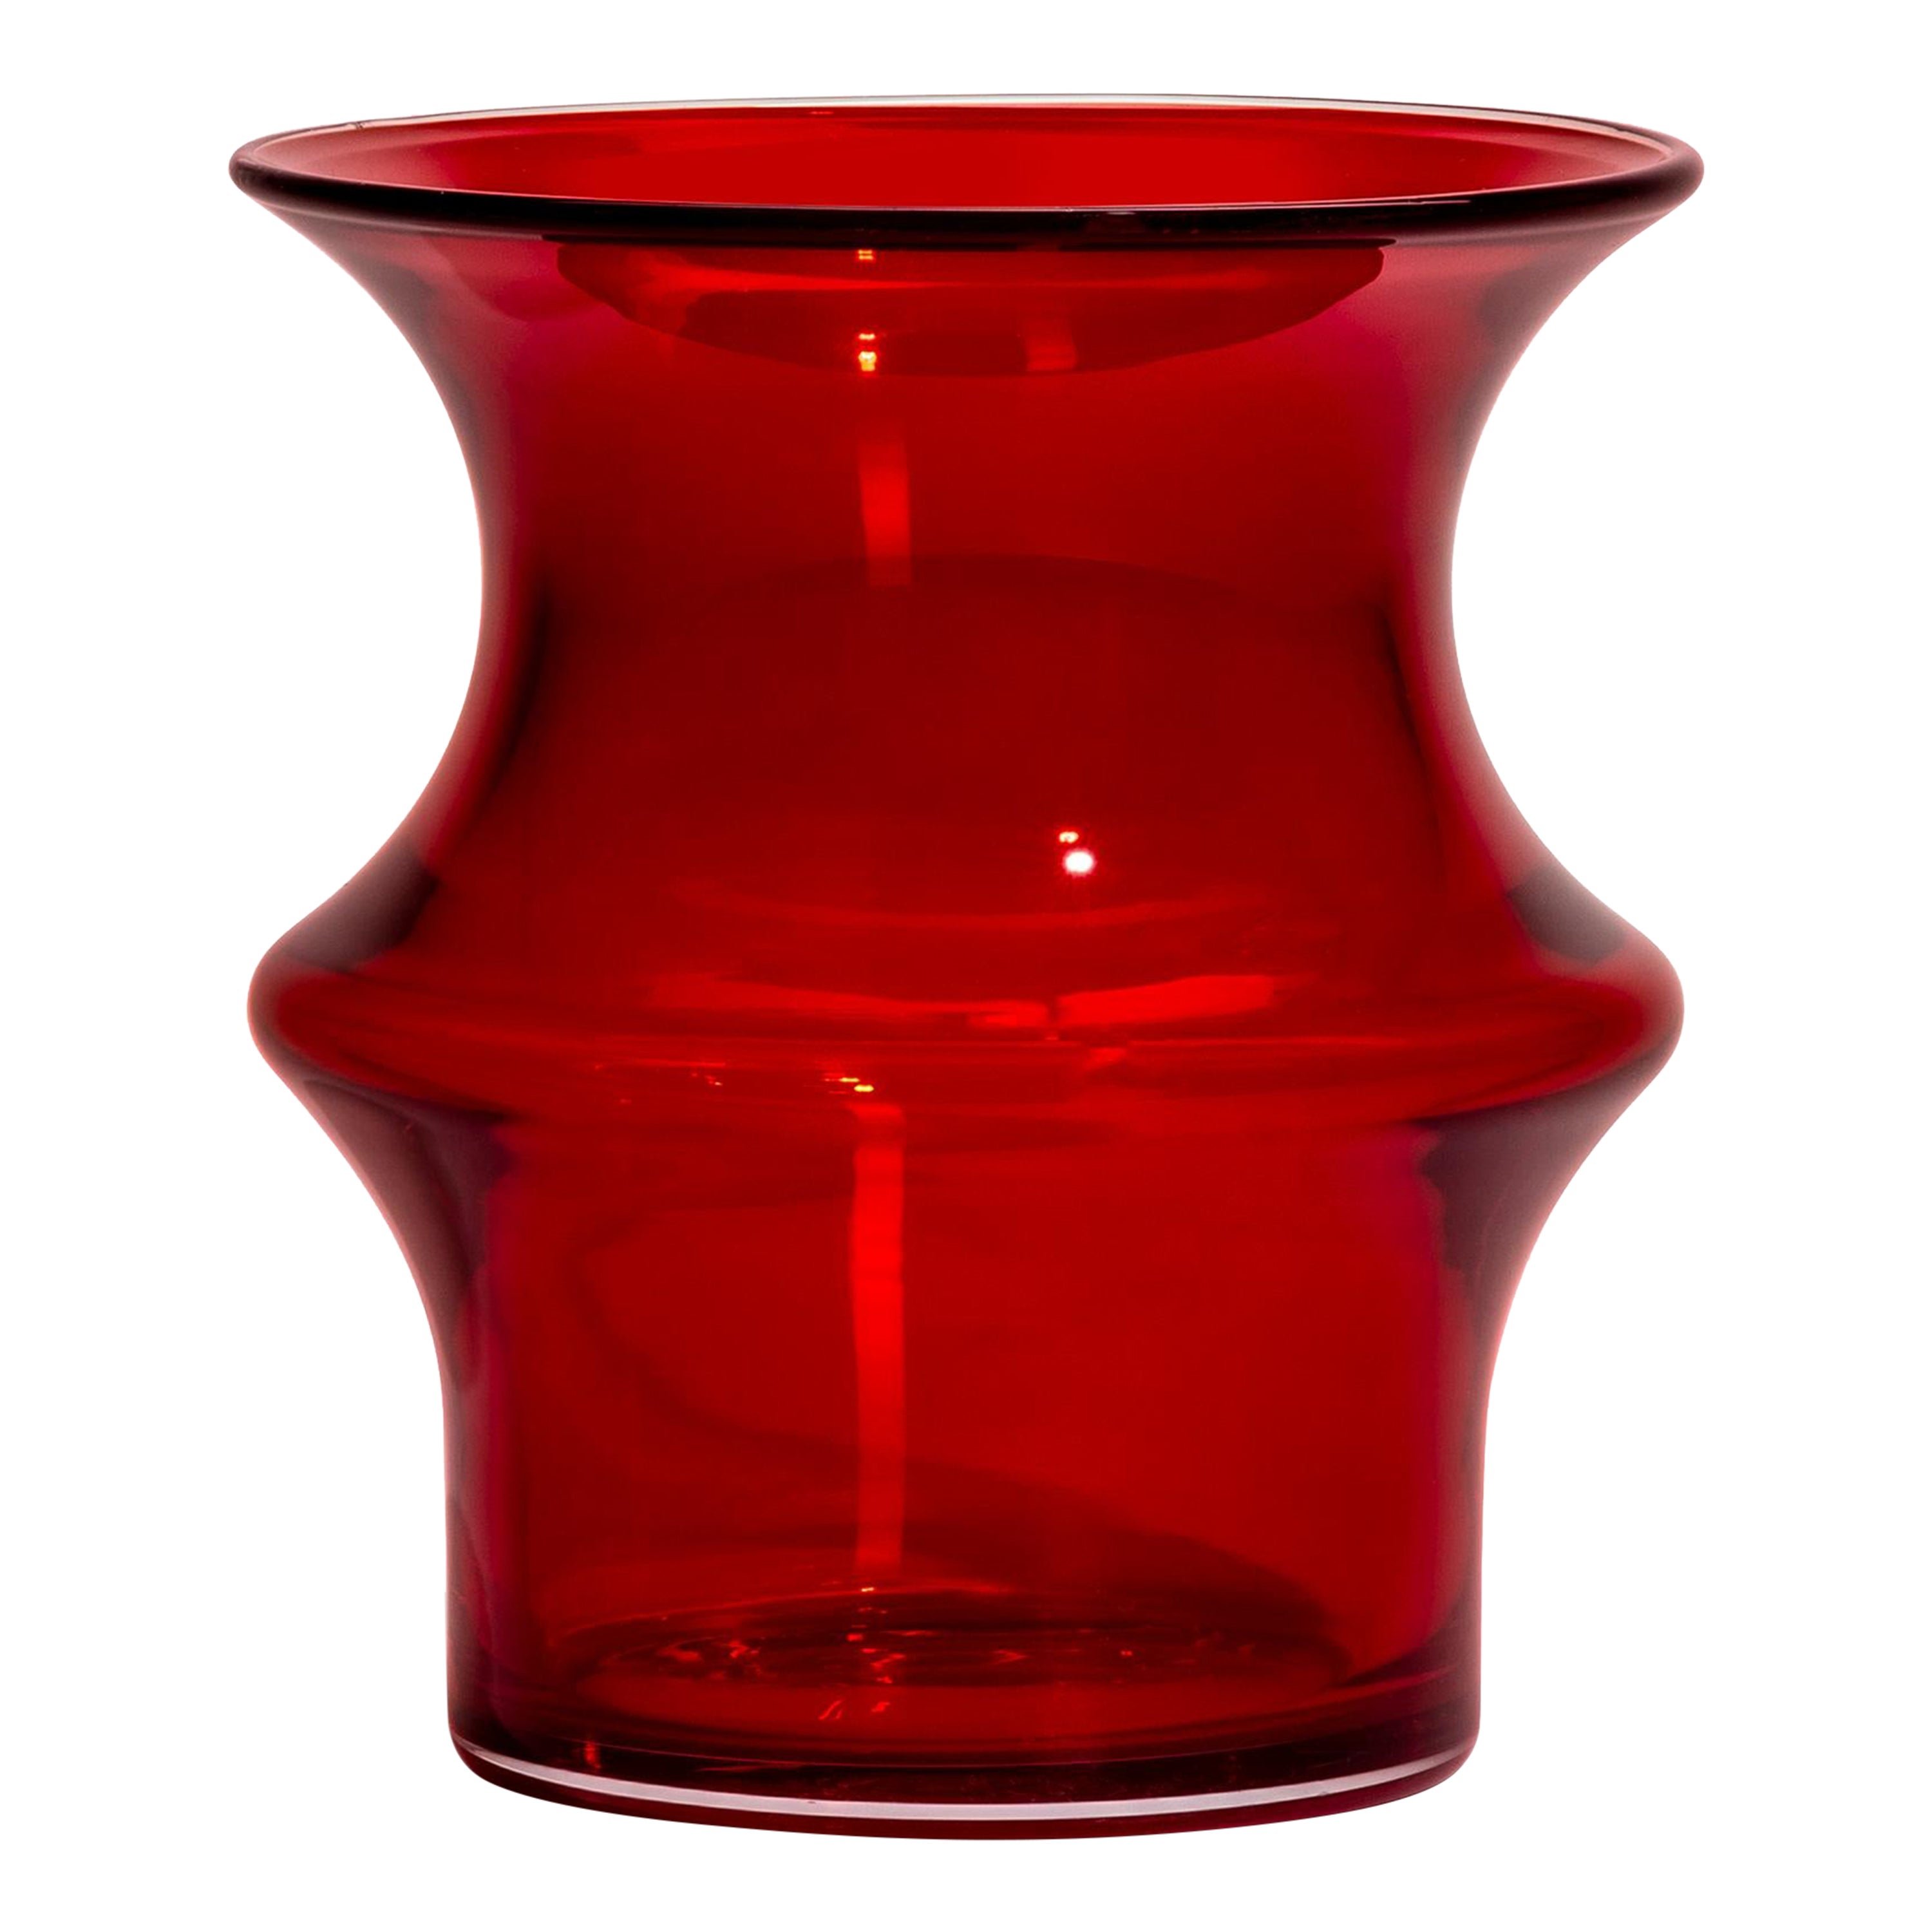 Kosta Boda Pagod Vase Red Small